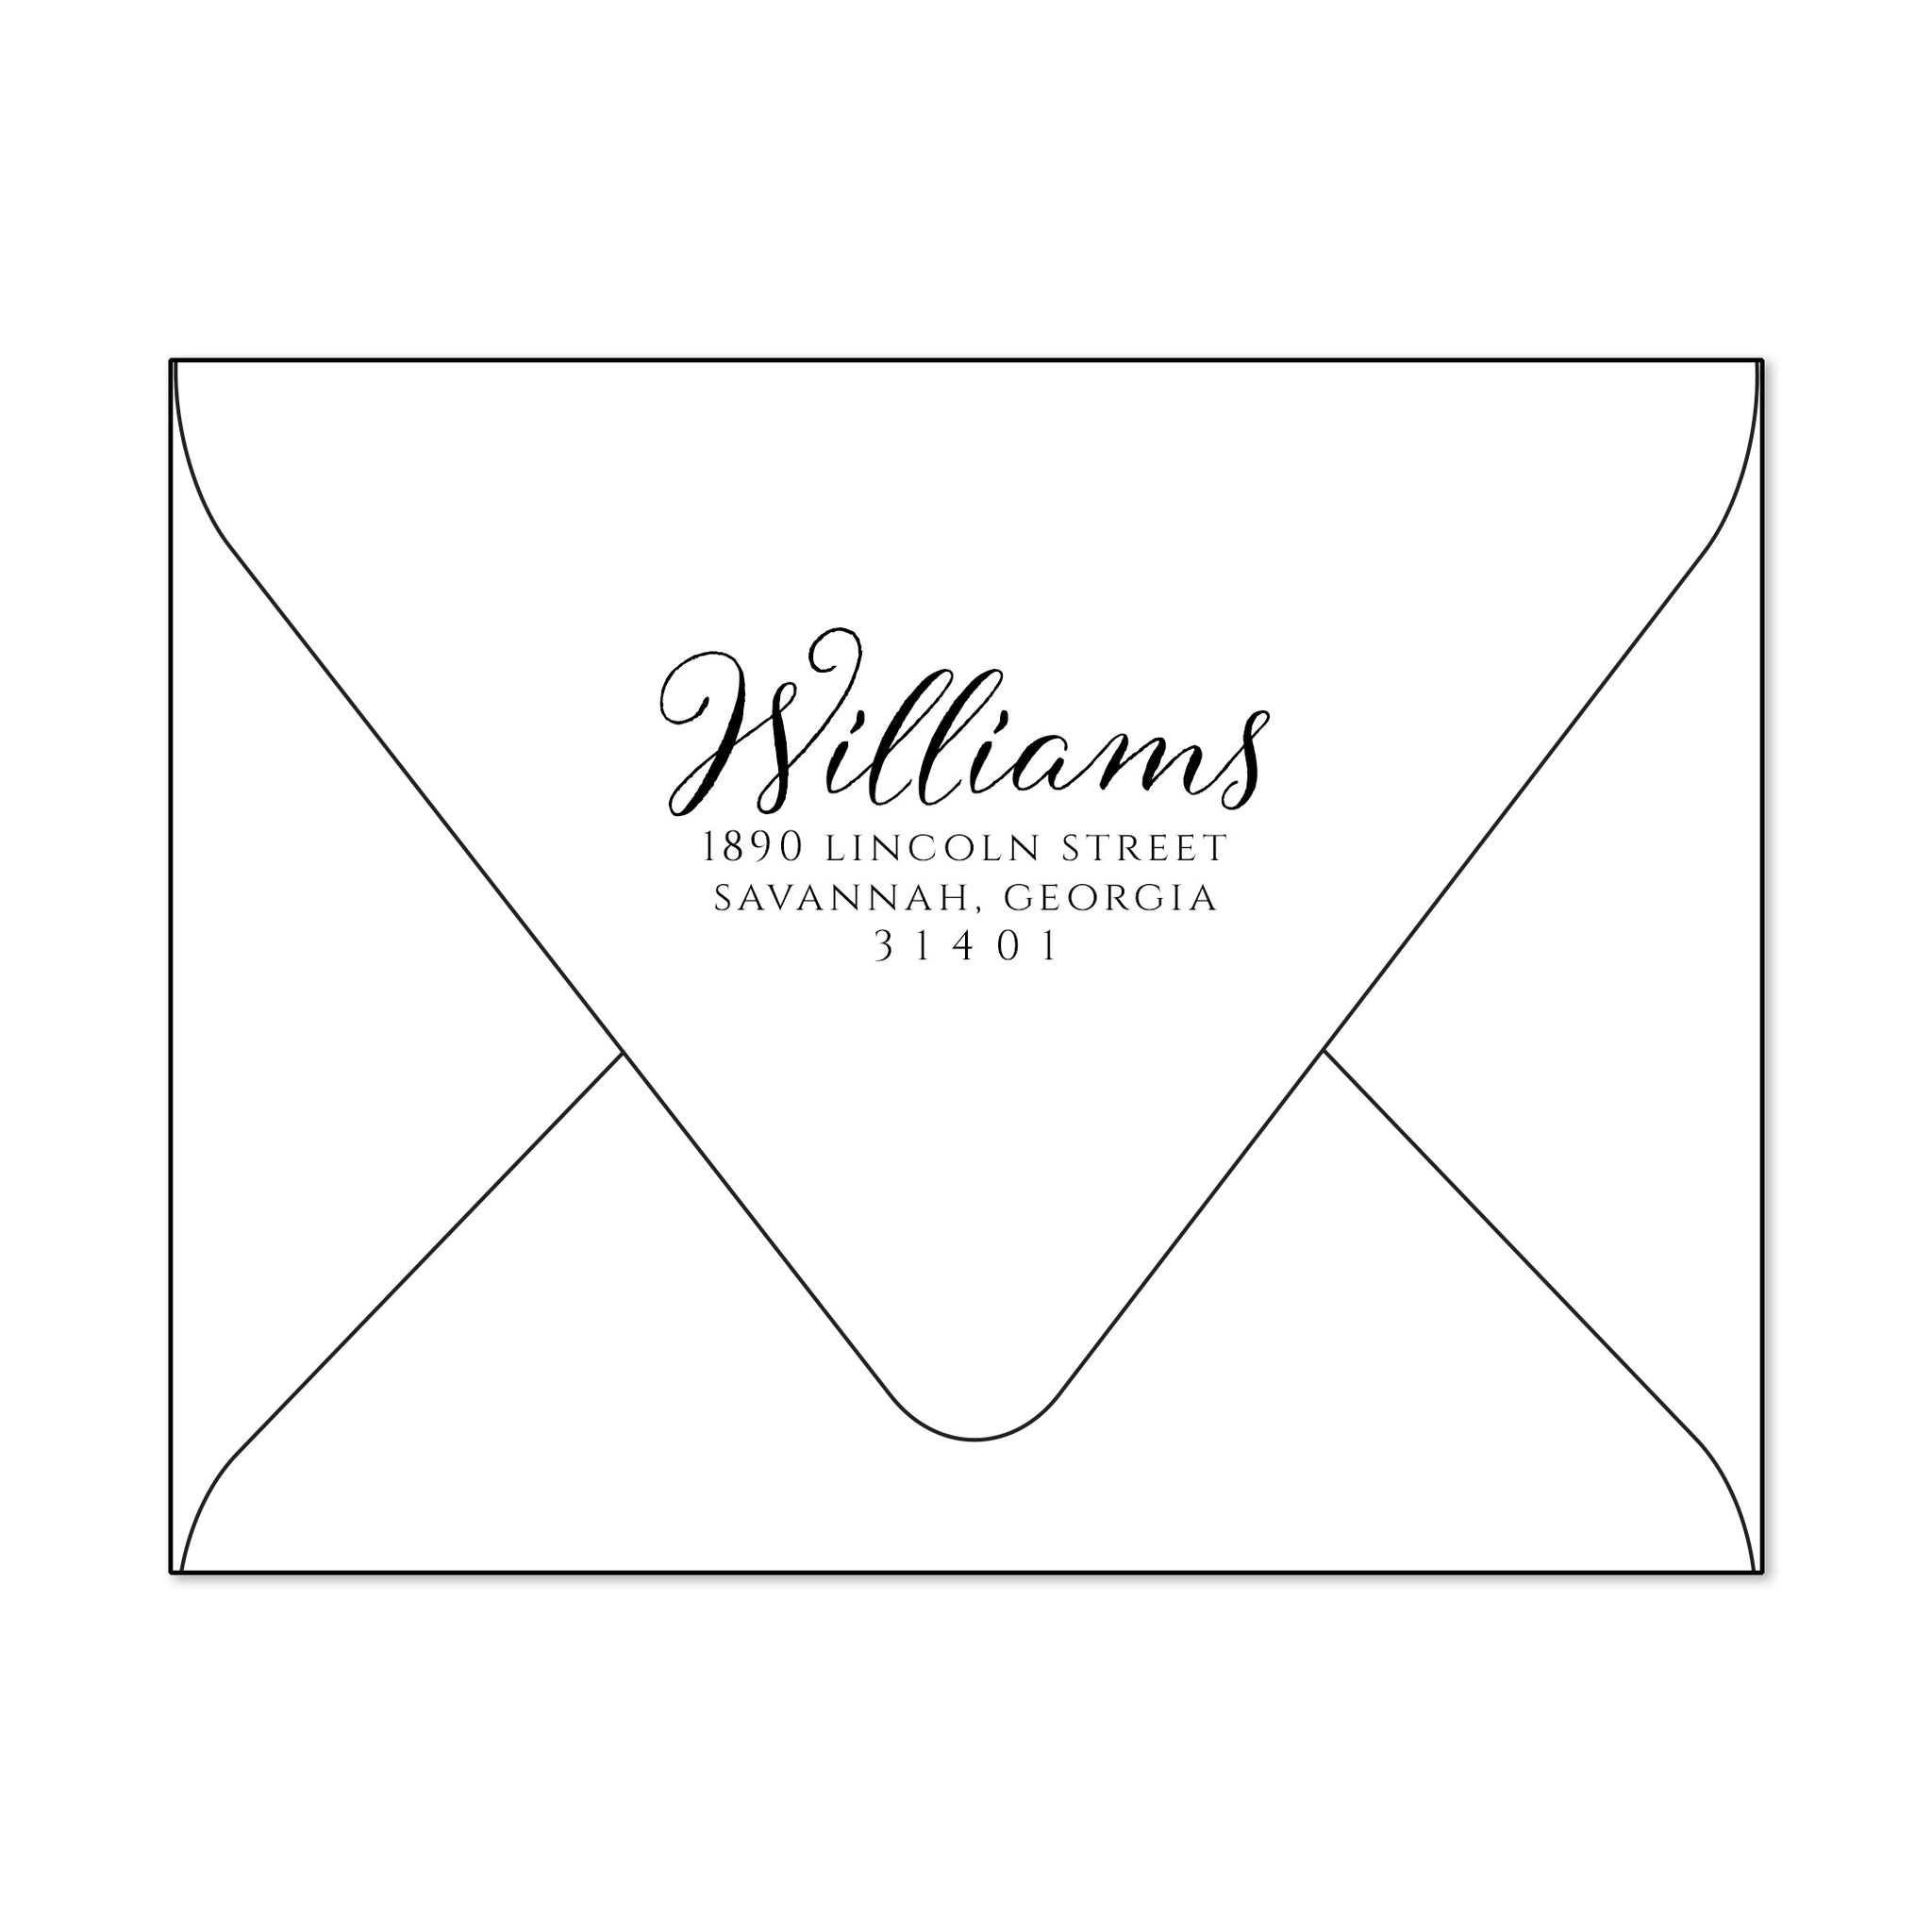 Custom Self Inking Stamp, Williams Design